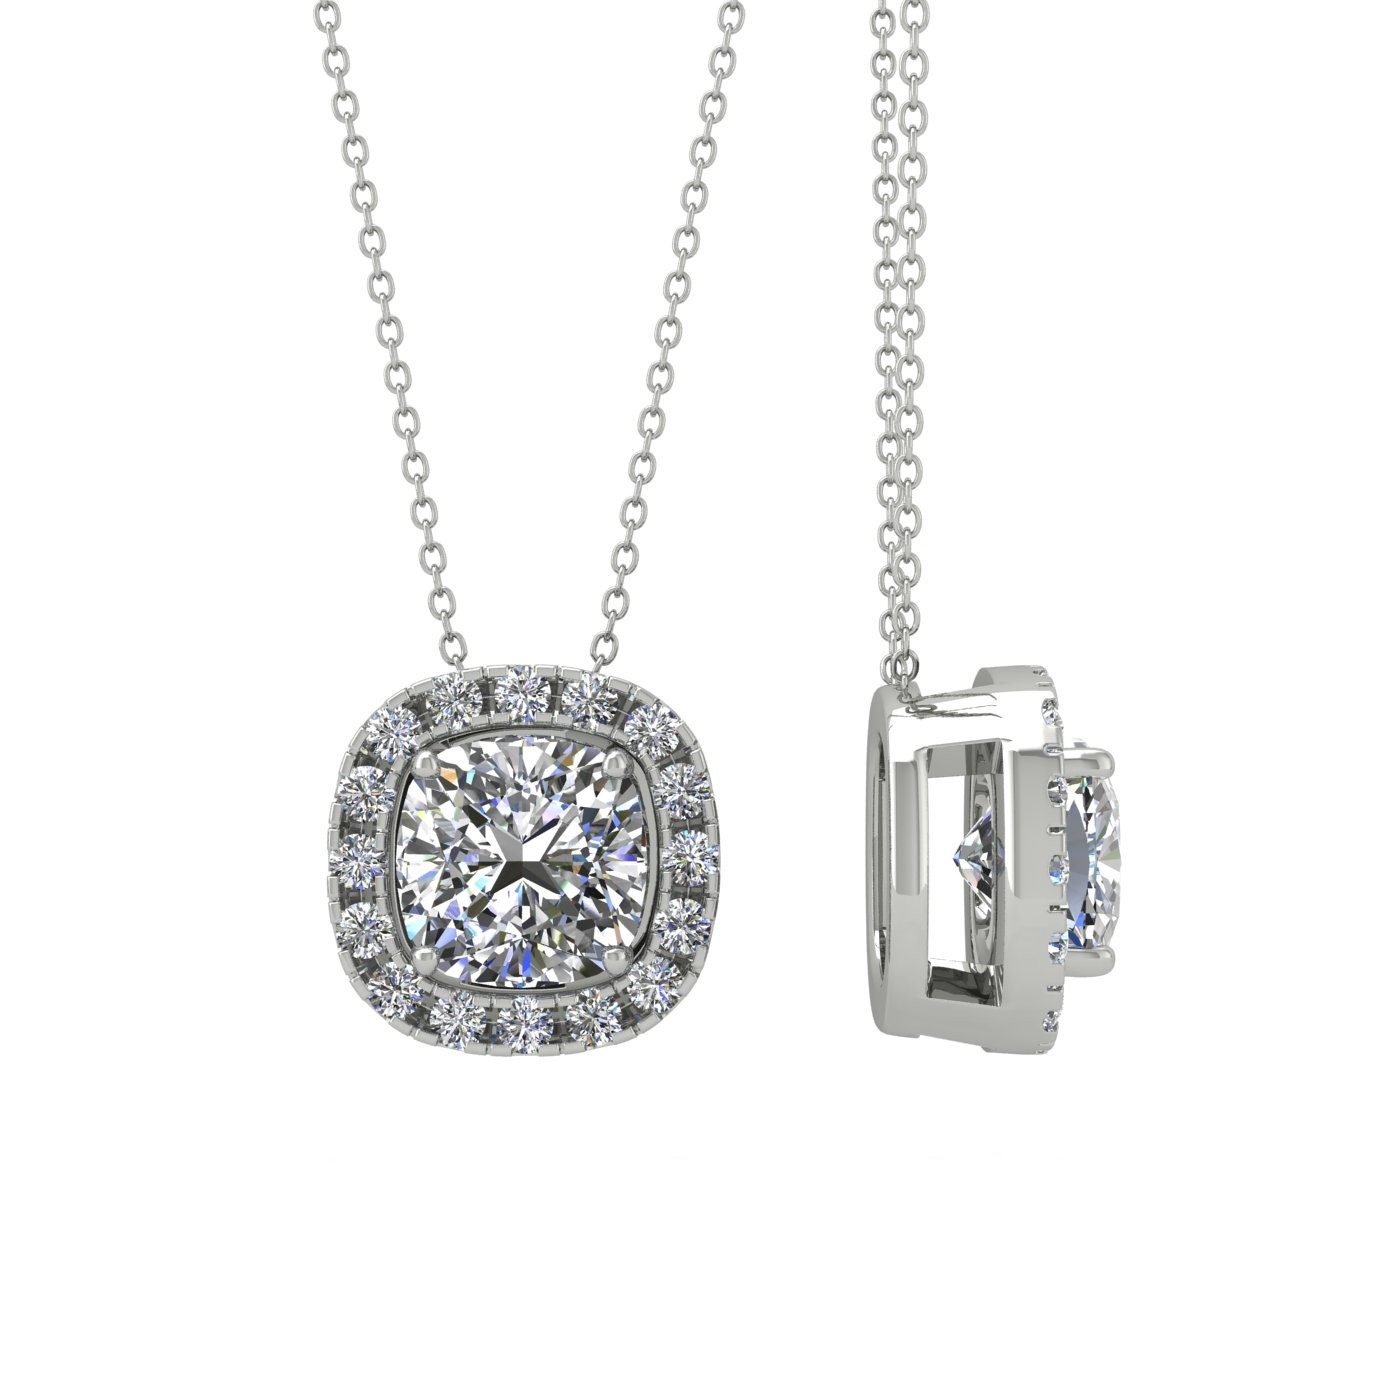 18k white gold 0,3 ct 4 prongs cushion shape diamond pendant with diamond pavÉ set halo Photos & images